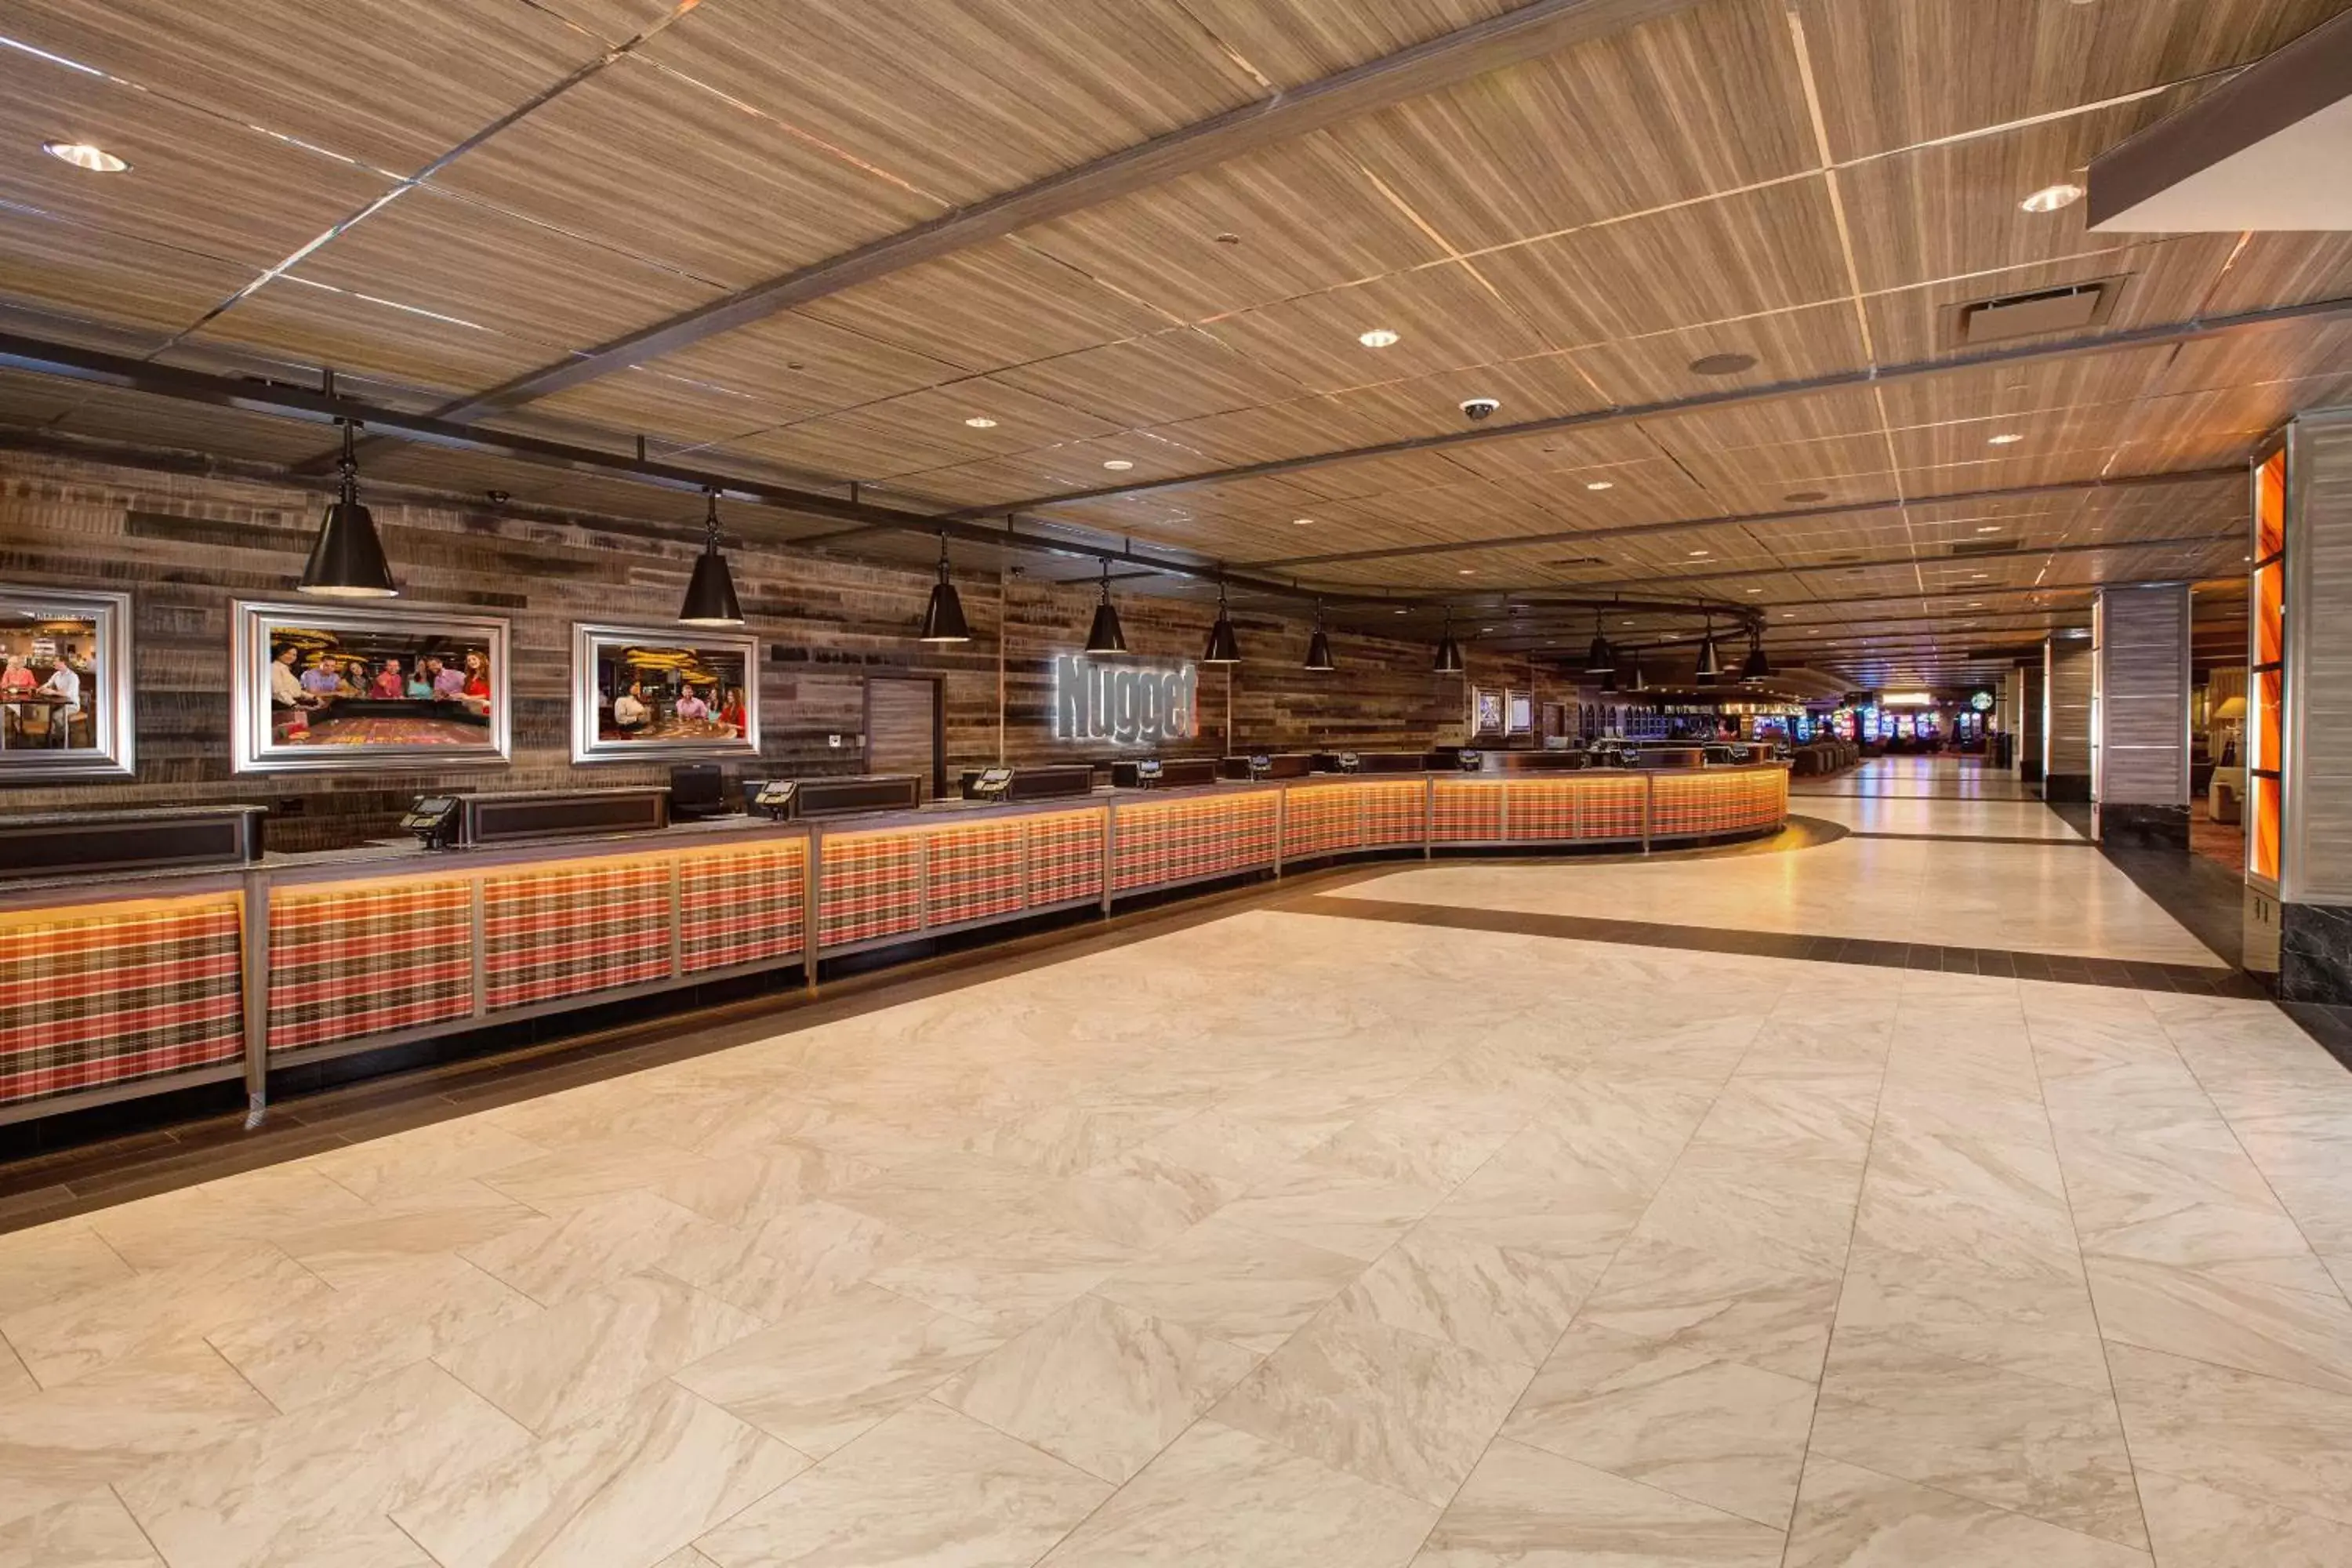 Lobby or reception in Nugget Casino Resort